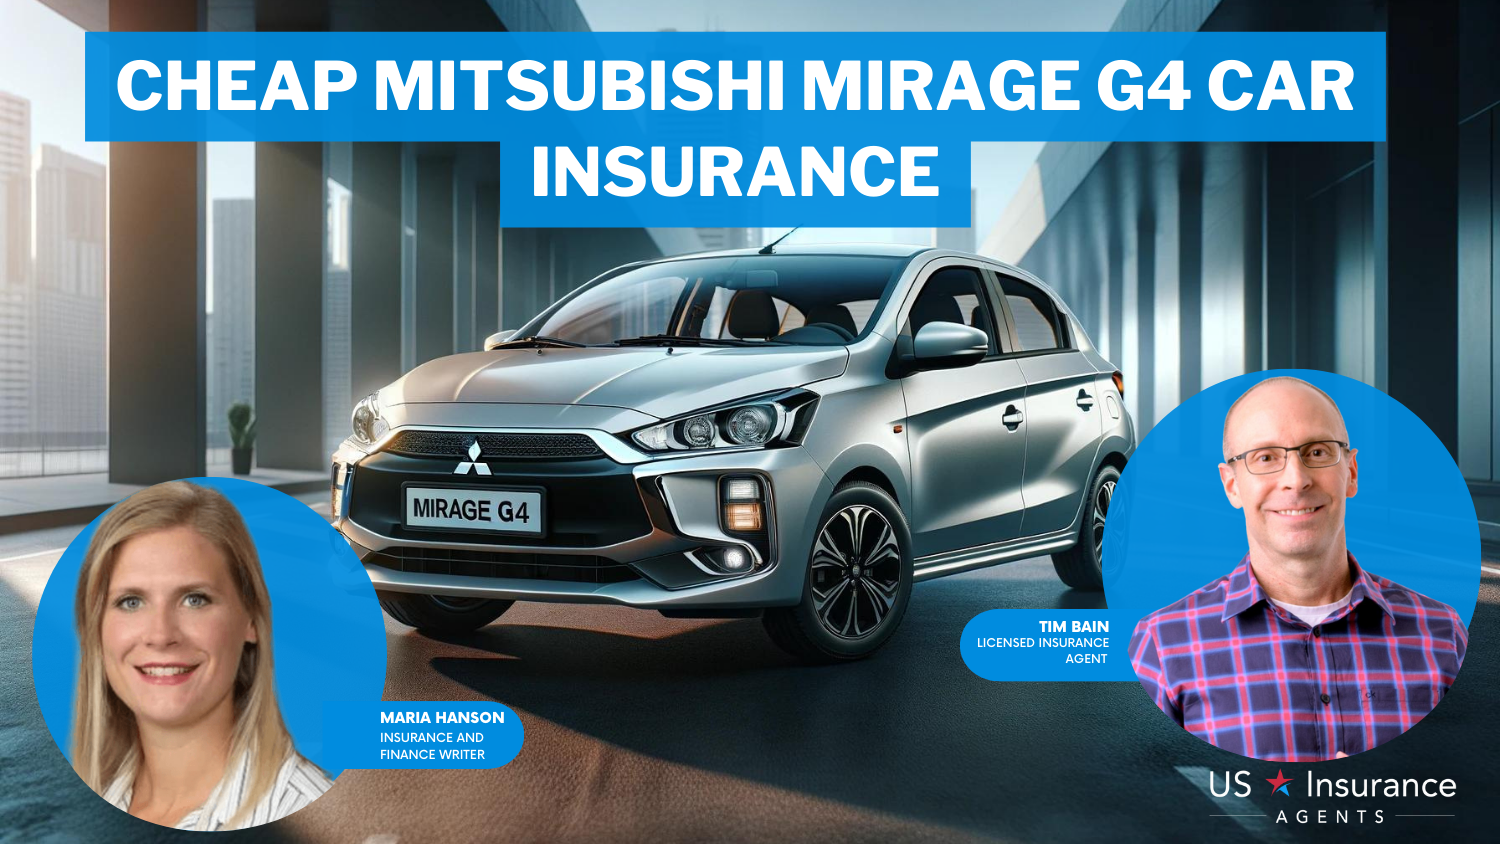 Progressive, State Farm, and Liberty Mutual: Cheap Mitsubishi Mirage G4 car insurance